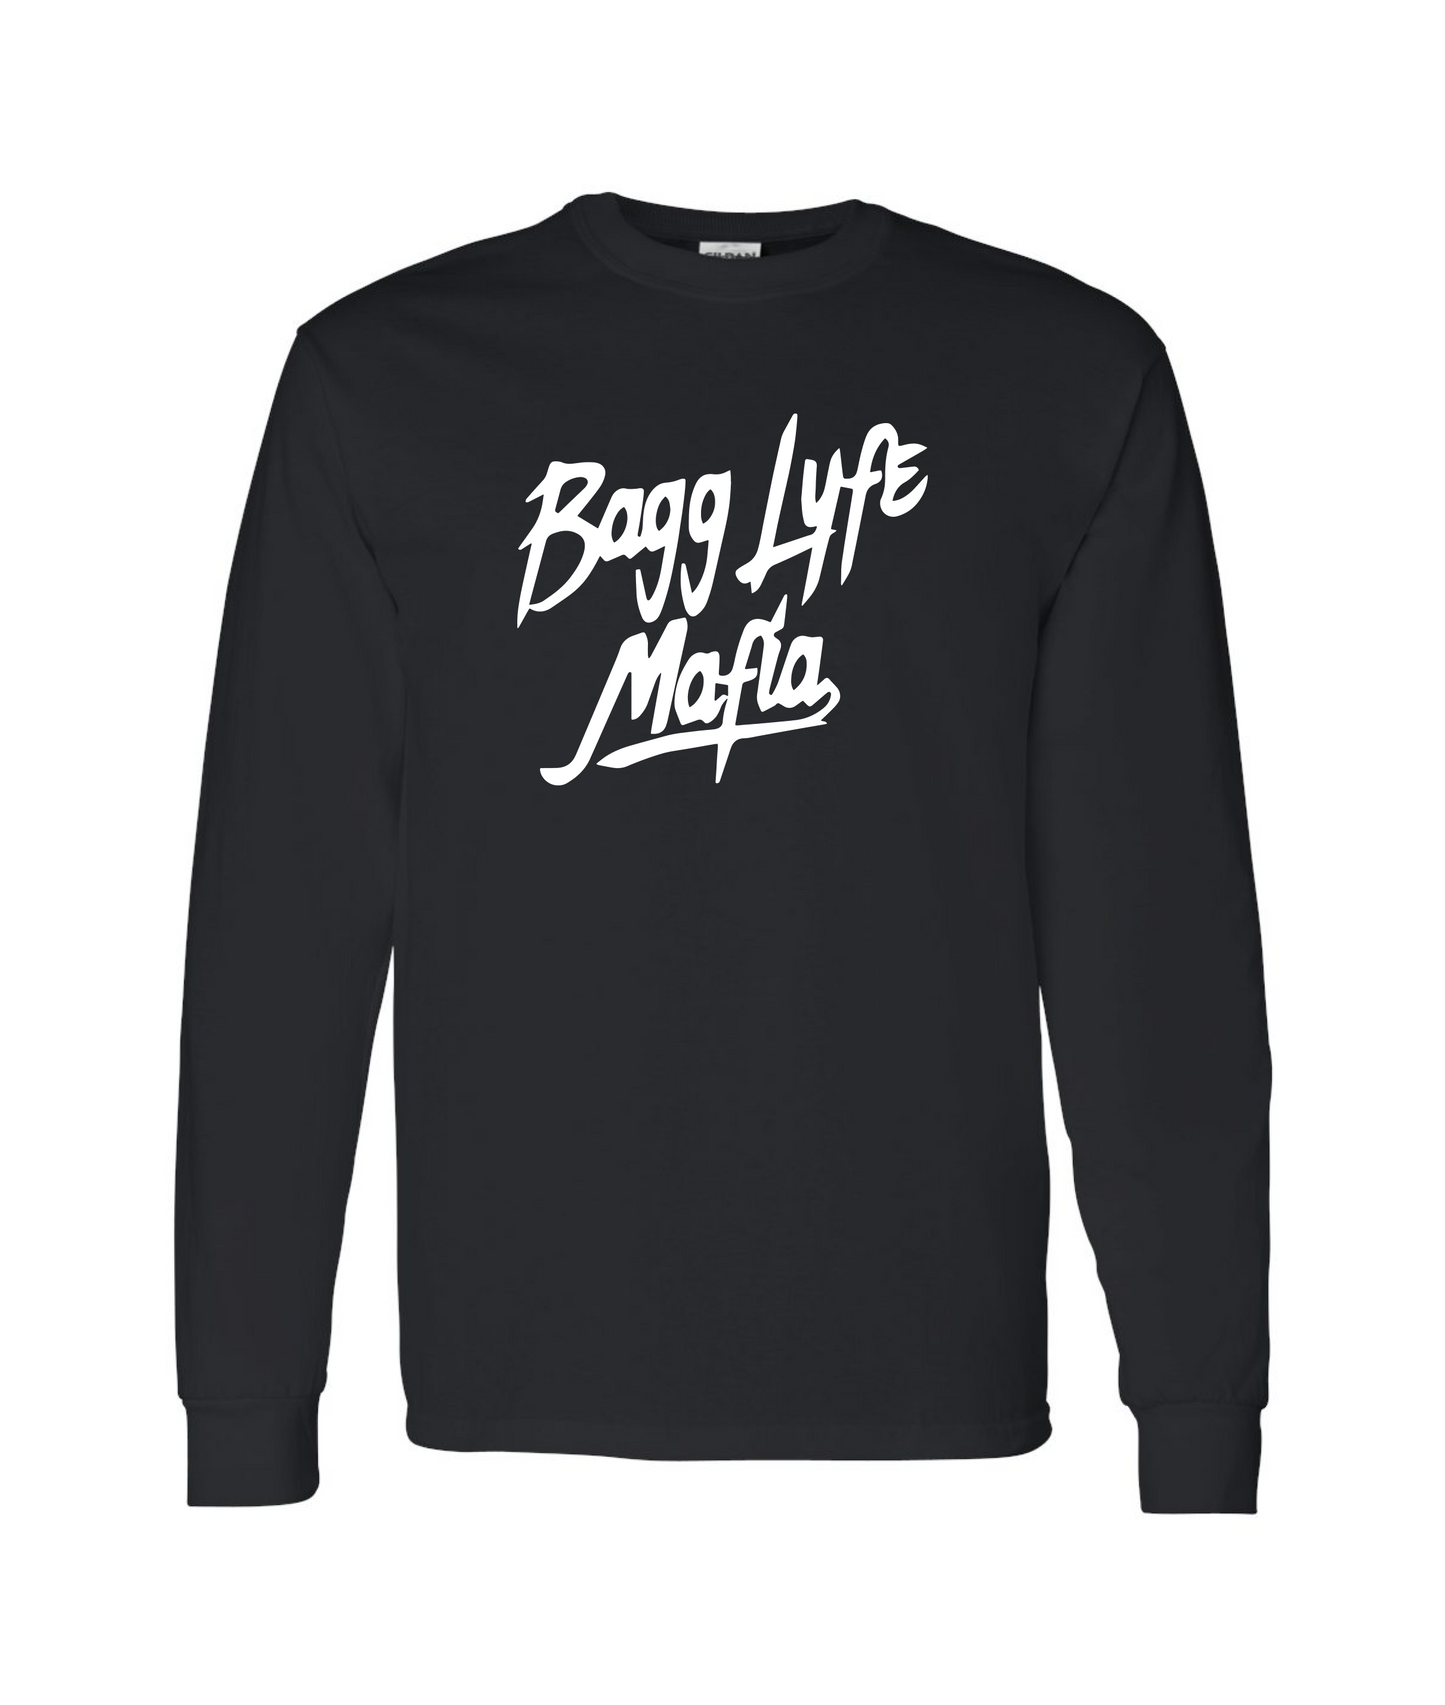 Bagglyfe Mafia Clothing - Logo - Black Long Sleeve T